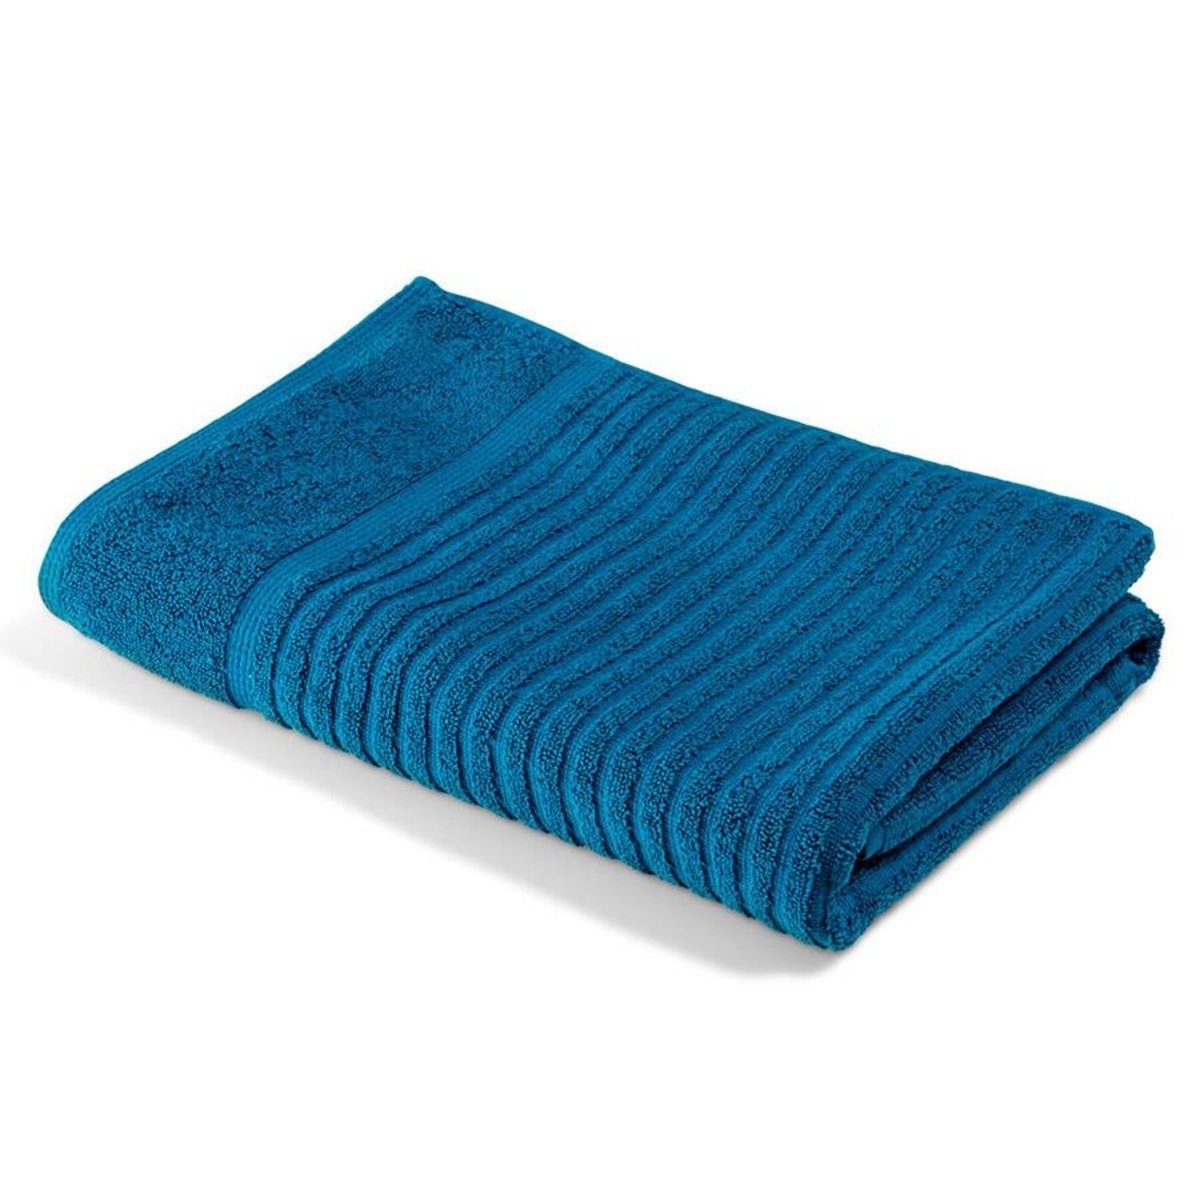 Metro Ribbed Cotton Bath Towel - Teal | Kmart